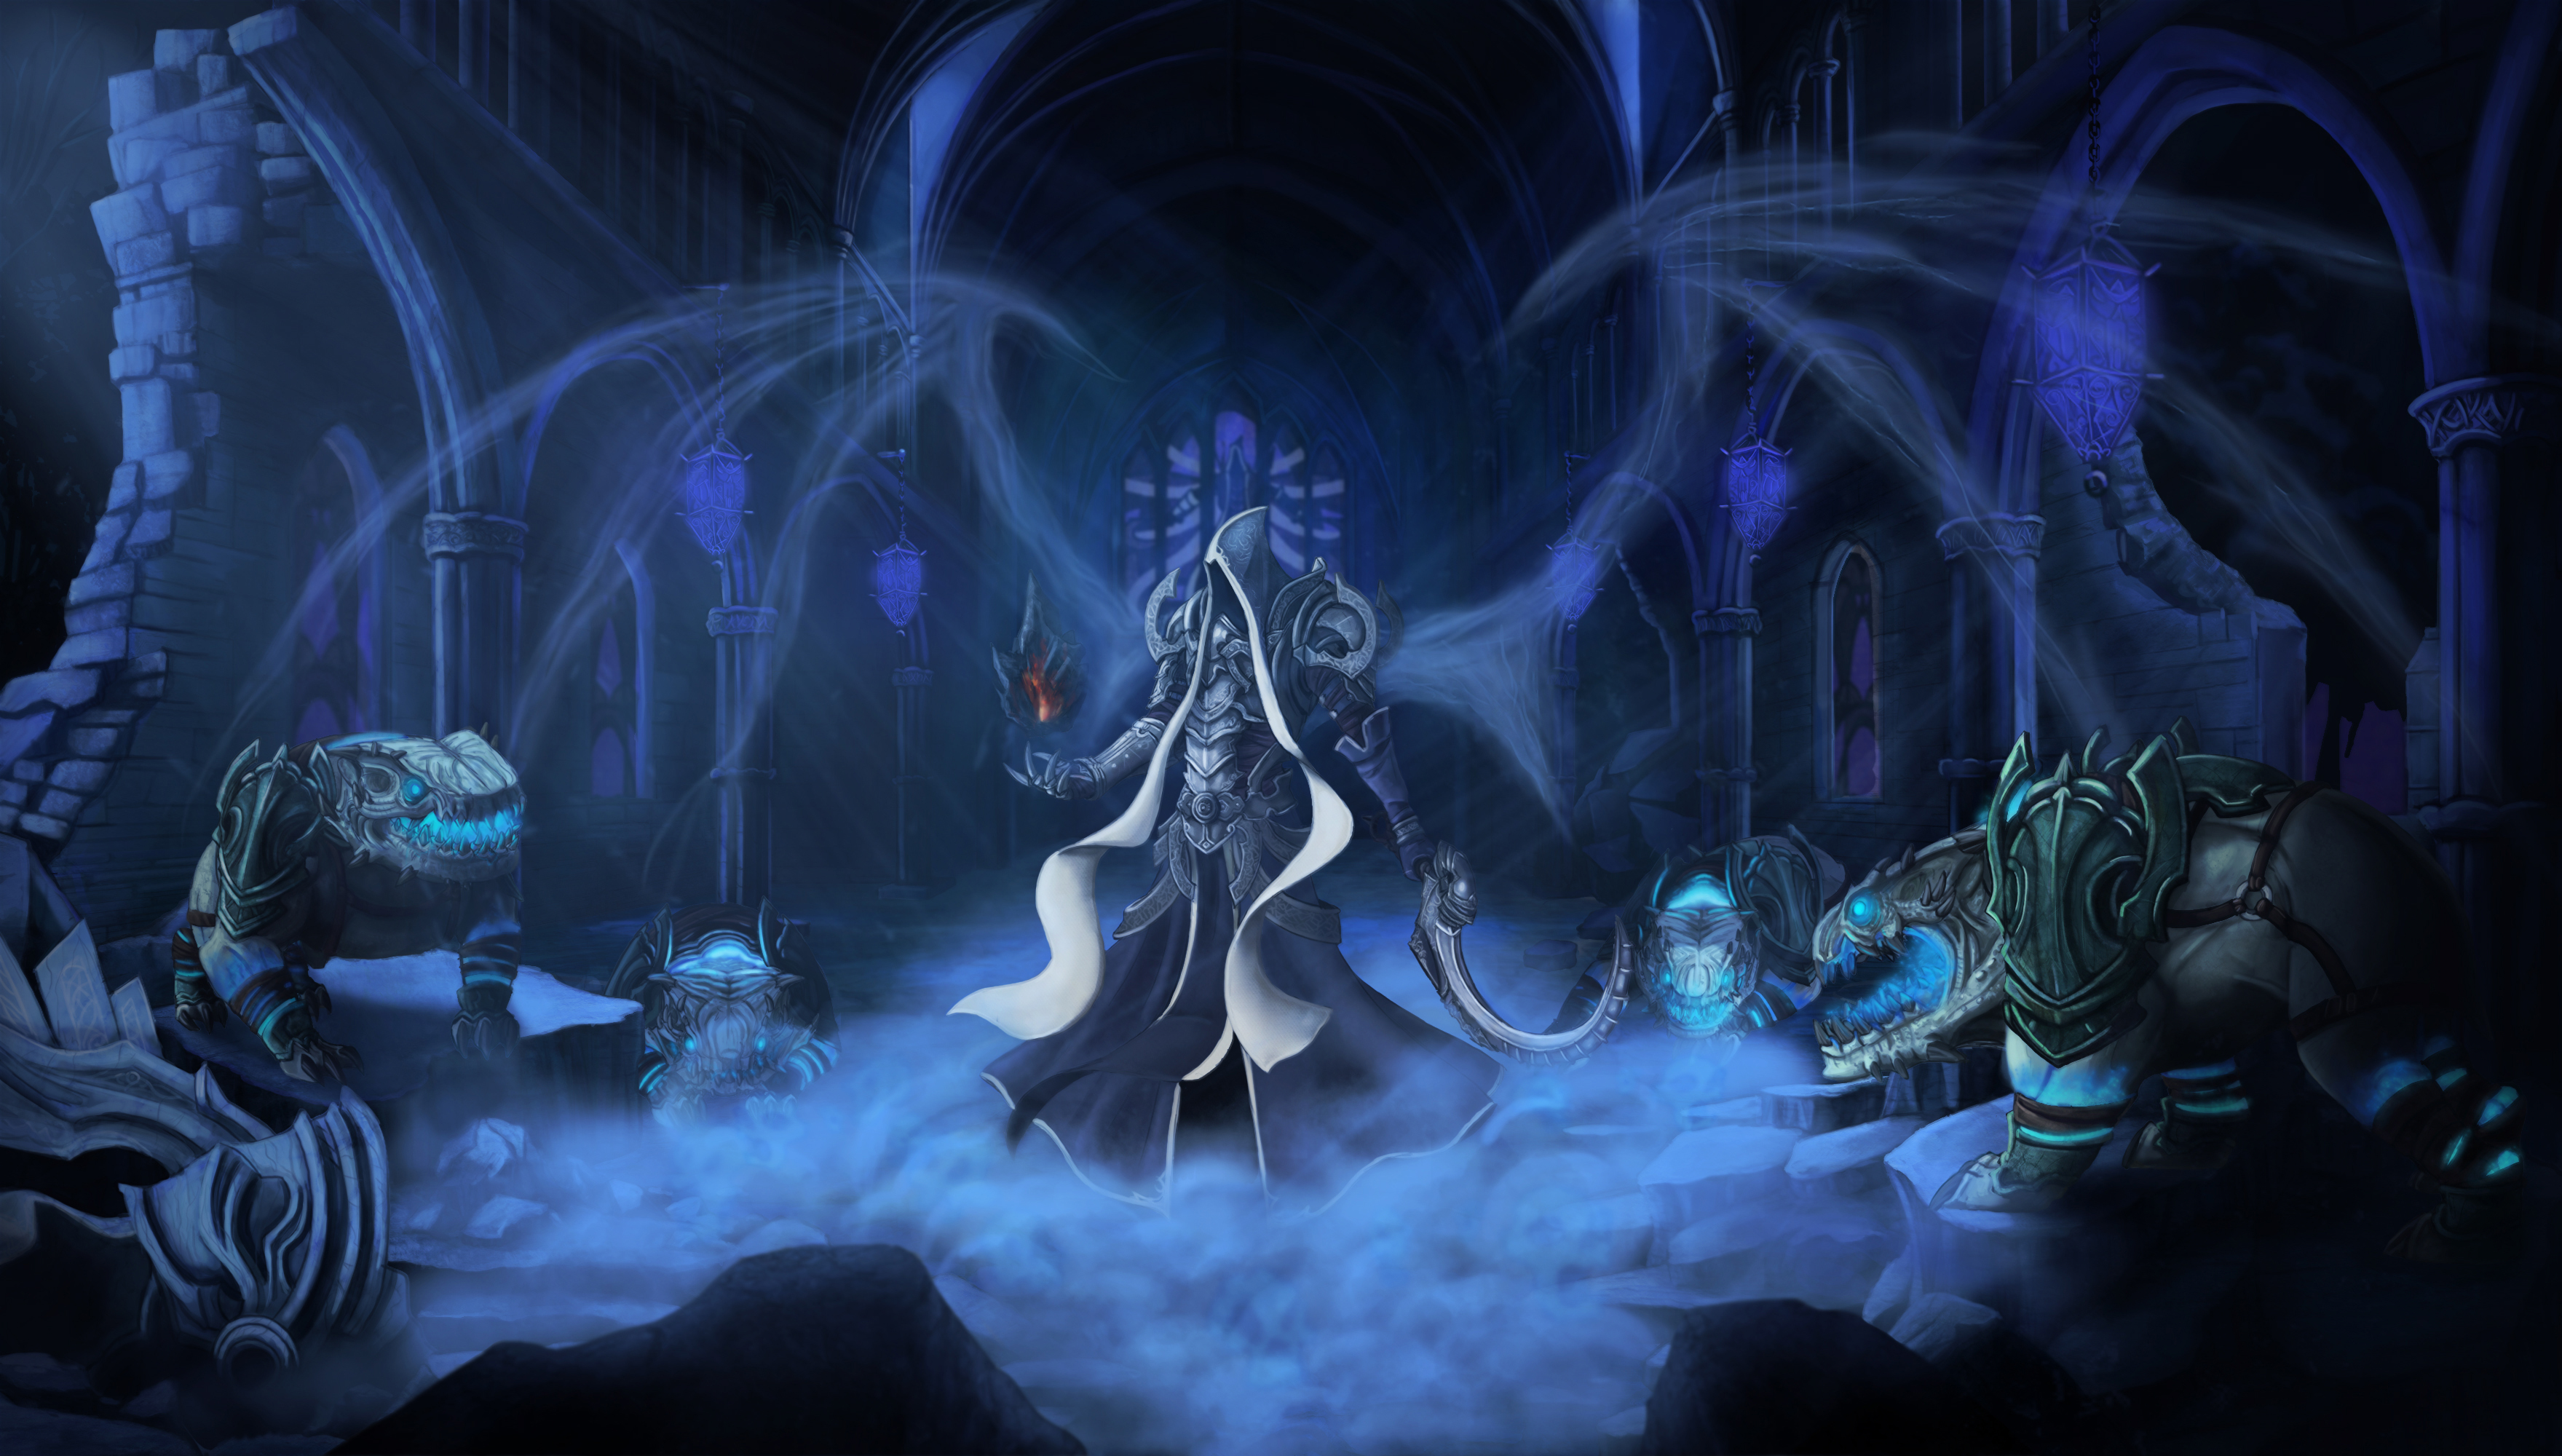 Baixe gratuitamente a imagem Diablo Iii: Reaper Of Souls, Maltael (Diablo Iii), Diablo, Videogame na área de trabalho do seu PC